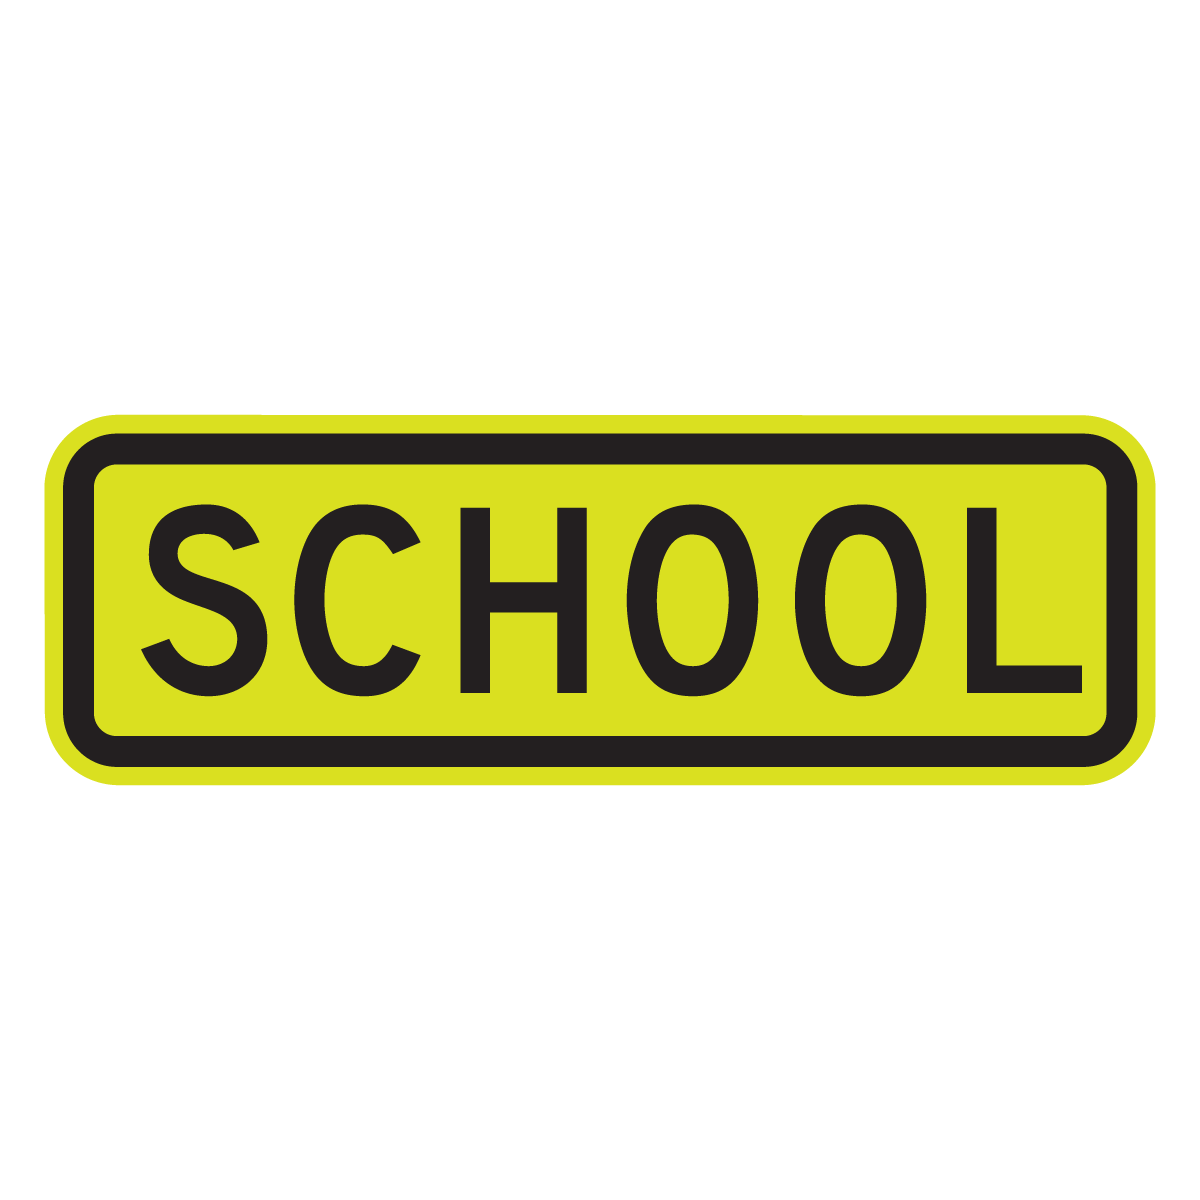 S4-3P School (plaque)